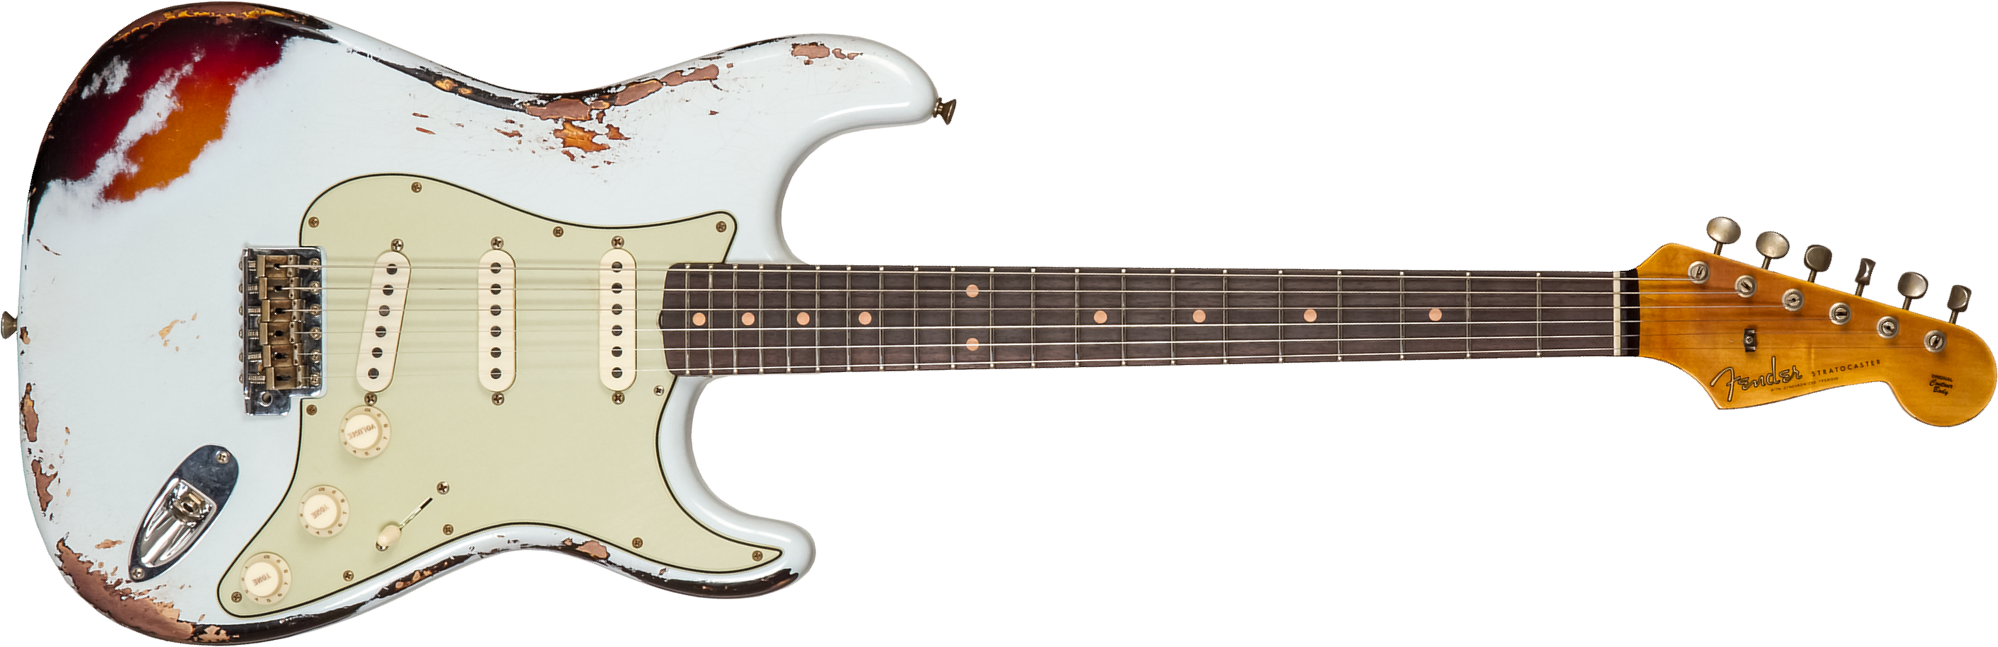 Fender Custom Shop Strat 1961 3s Trem Rw #cz573714 - Heavy Relic Aged Sonic Blue O. 3-color Sunburst - E-Gitarre in Str-Form - Main picture